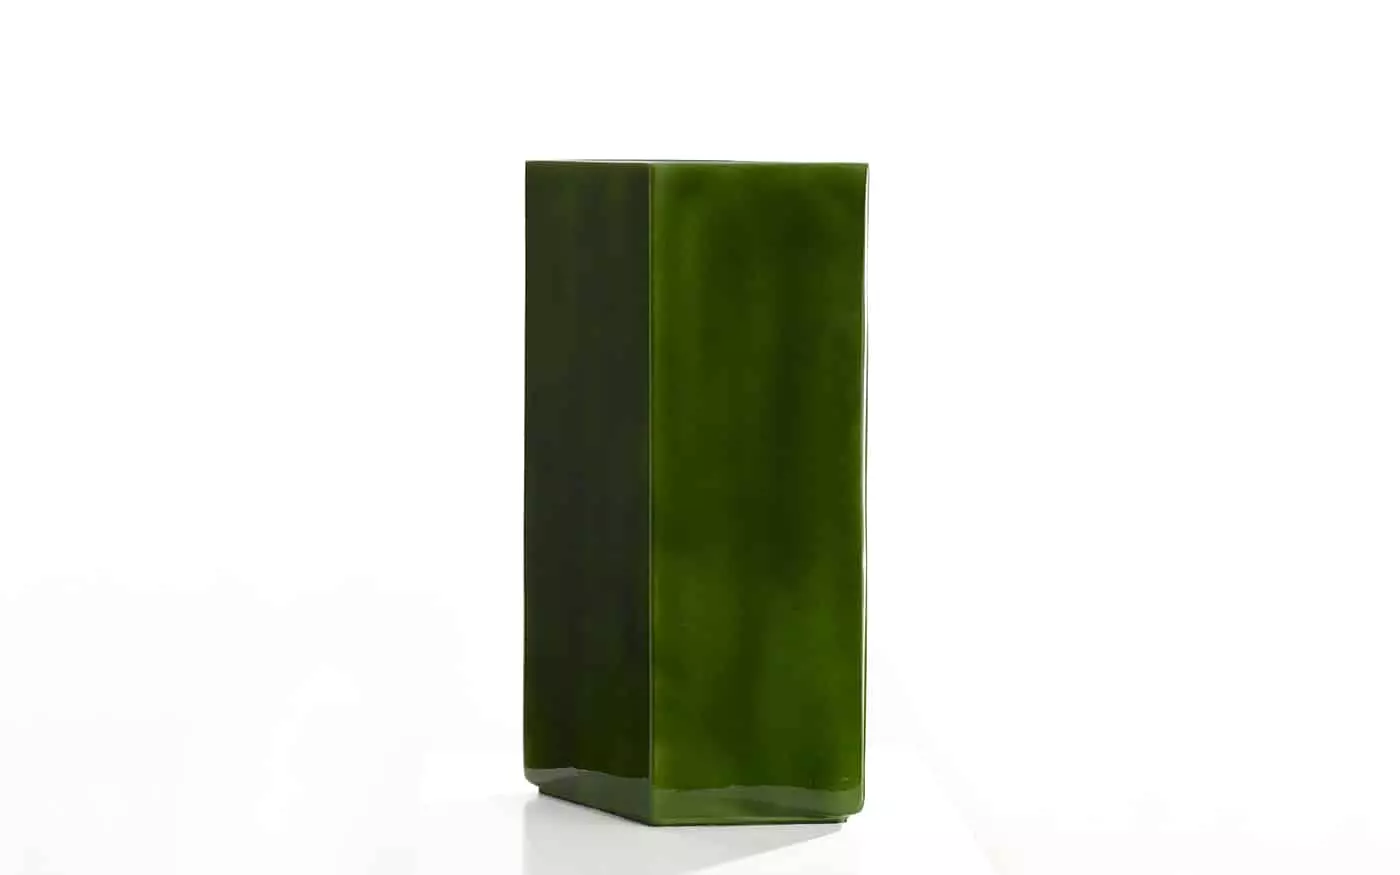 Vase Losange 84 green - Ronan & Erwan Bouroullec - Carpet - Galerie kreo